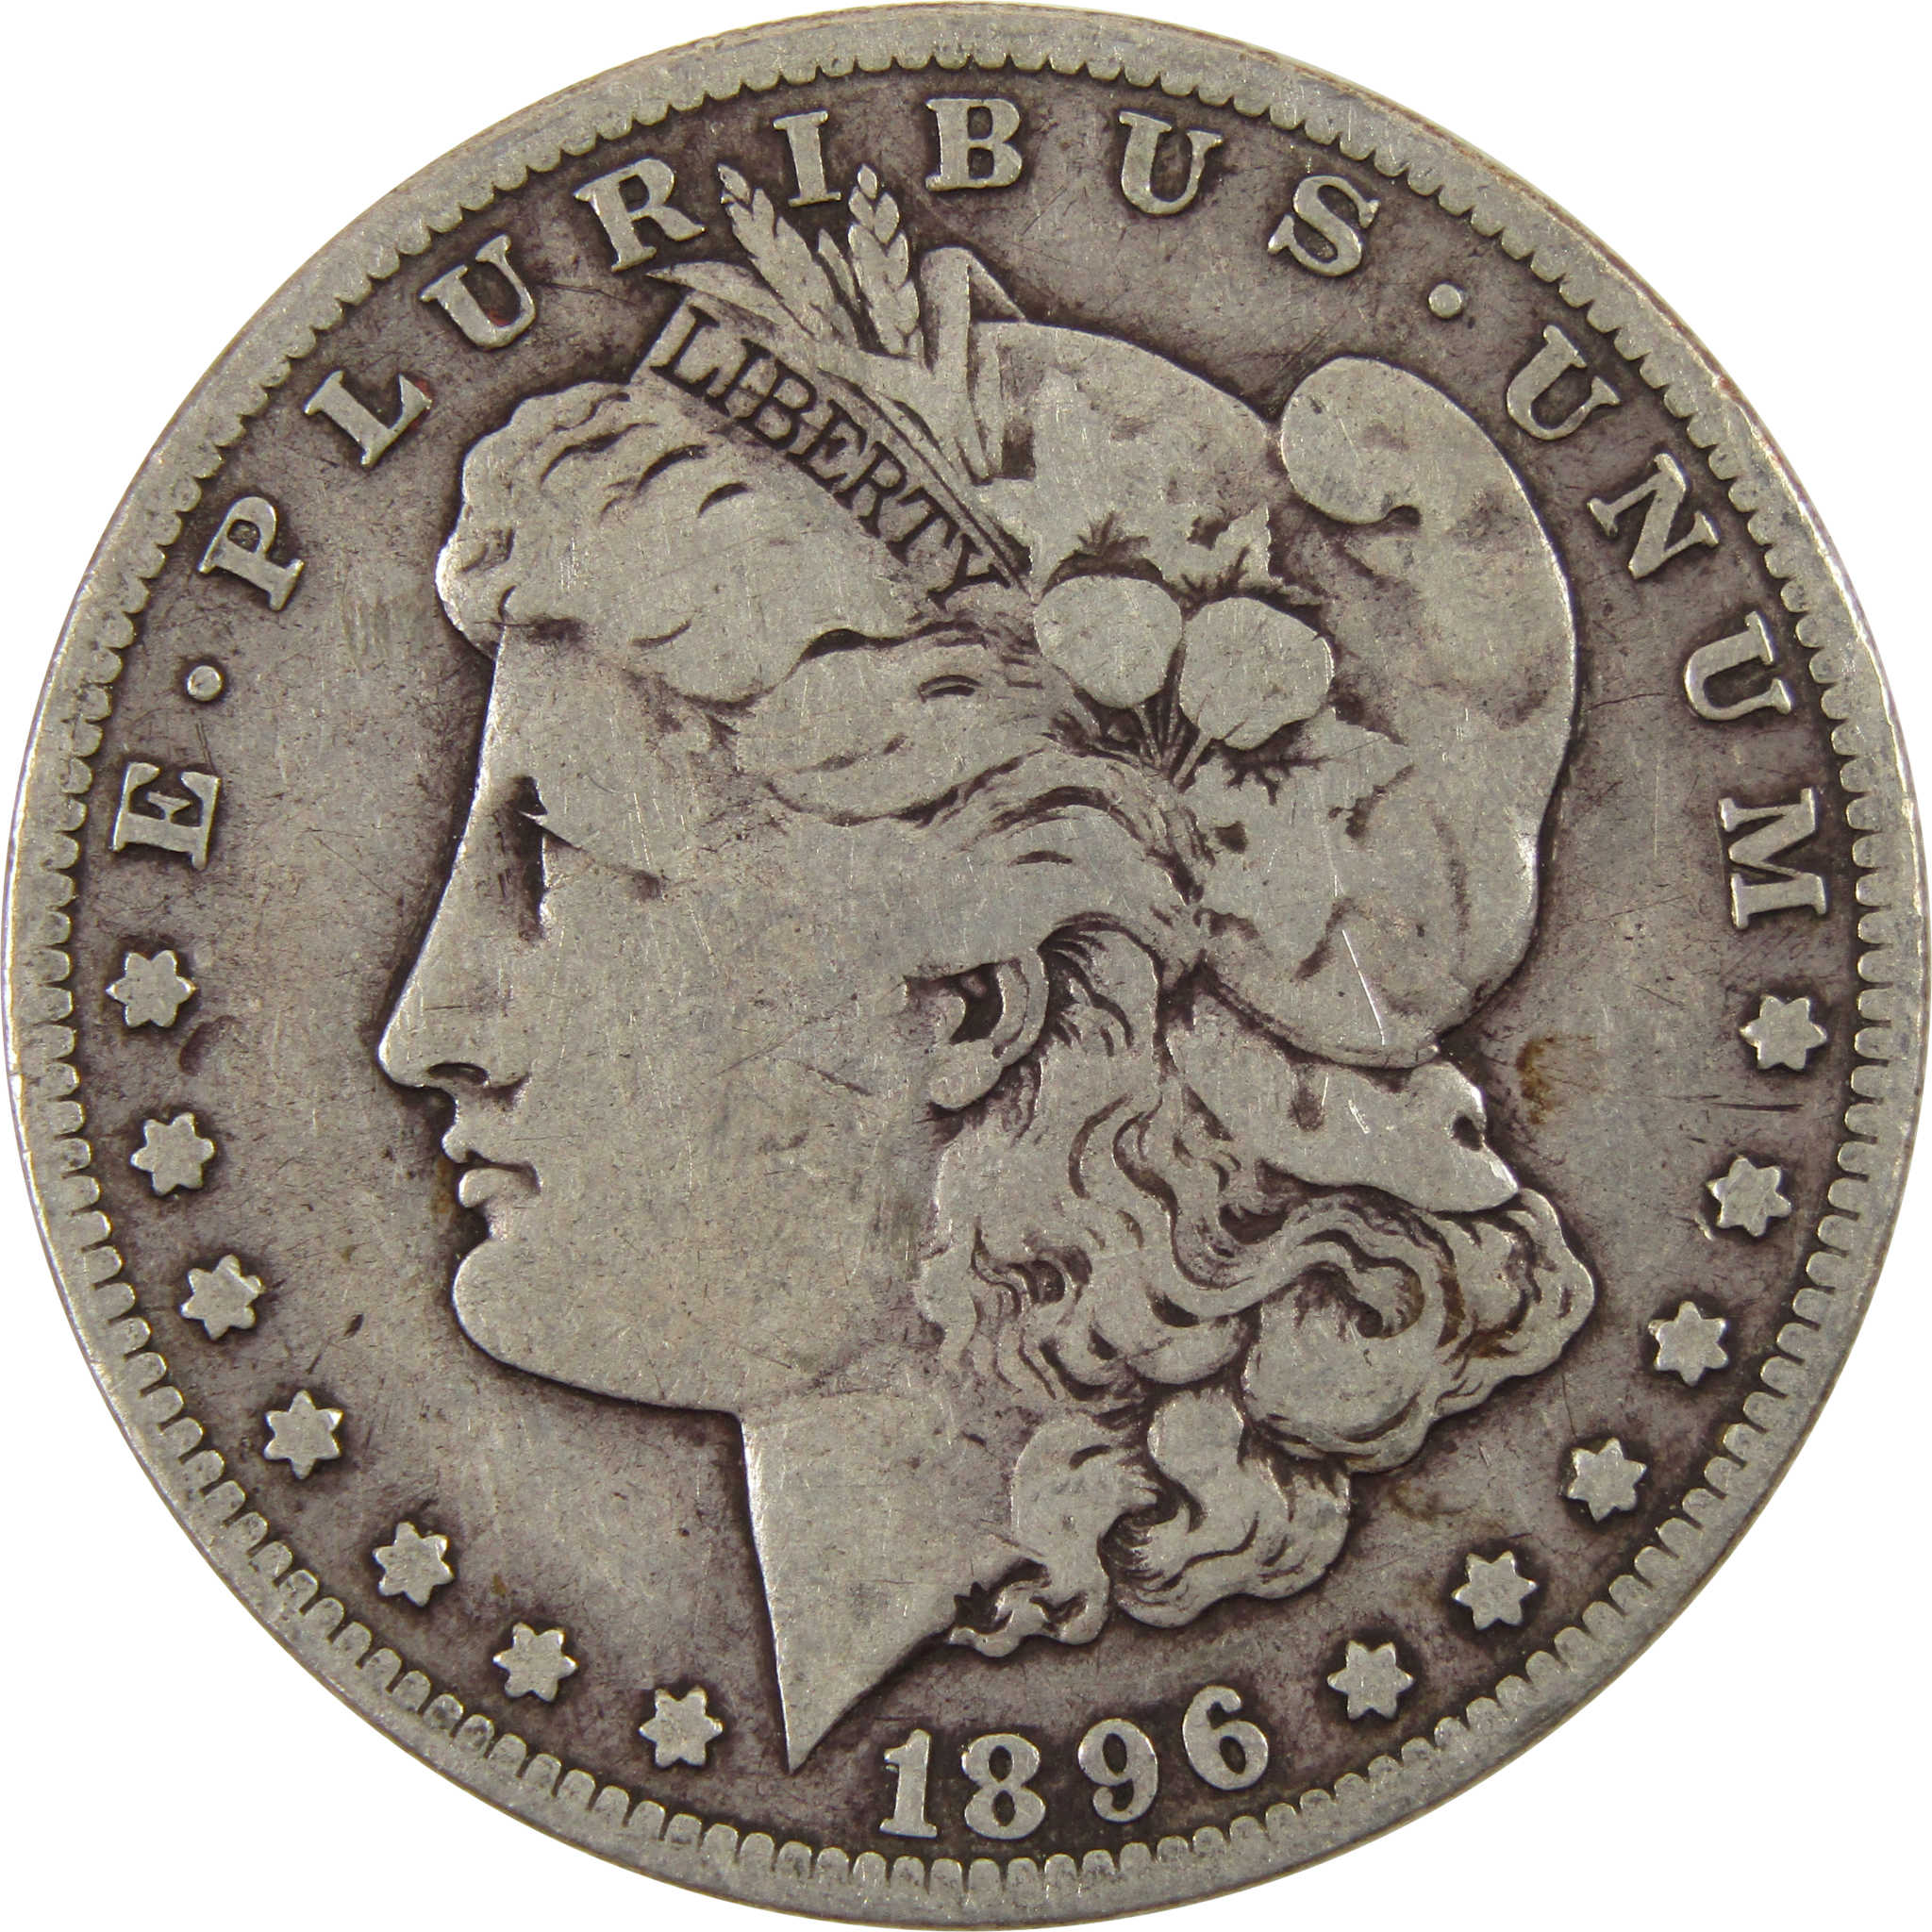 1896 S Morgan Dollar F Fine 90% Silver $1 Coin SKU:I9162 - Morgan coin - Morgan silver dollar - Morgan silver dollar for sale - Profile Coins &amp; Collectibles